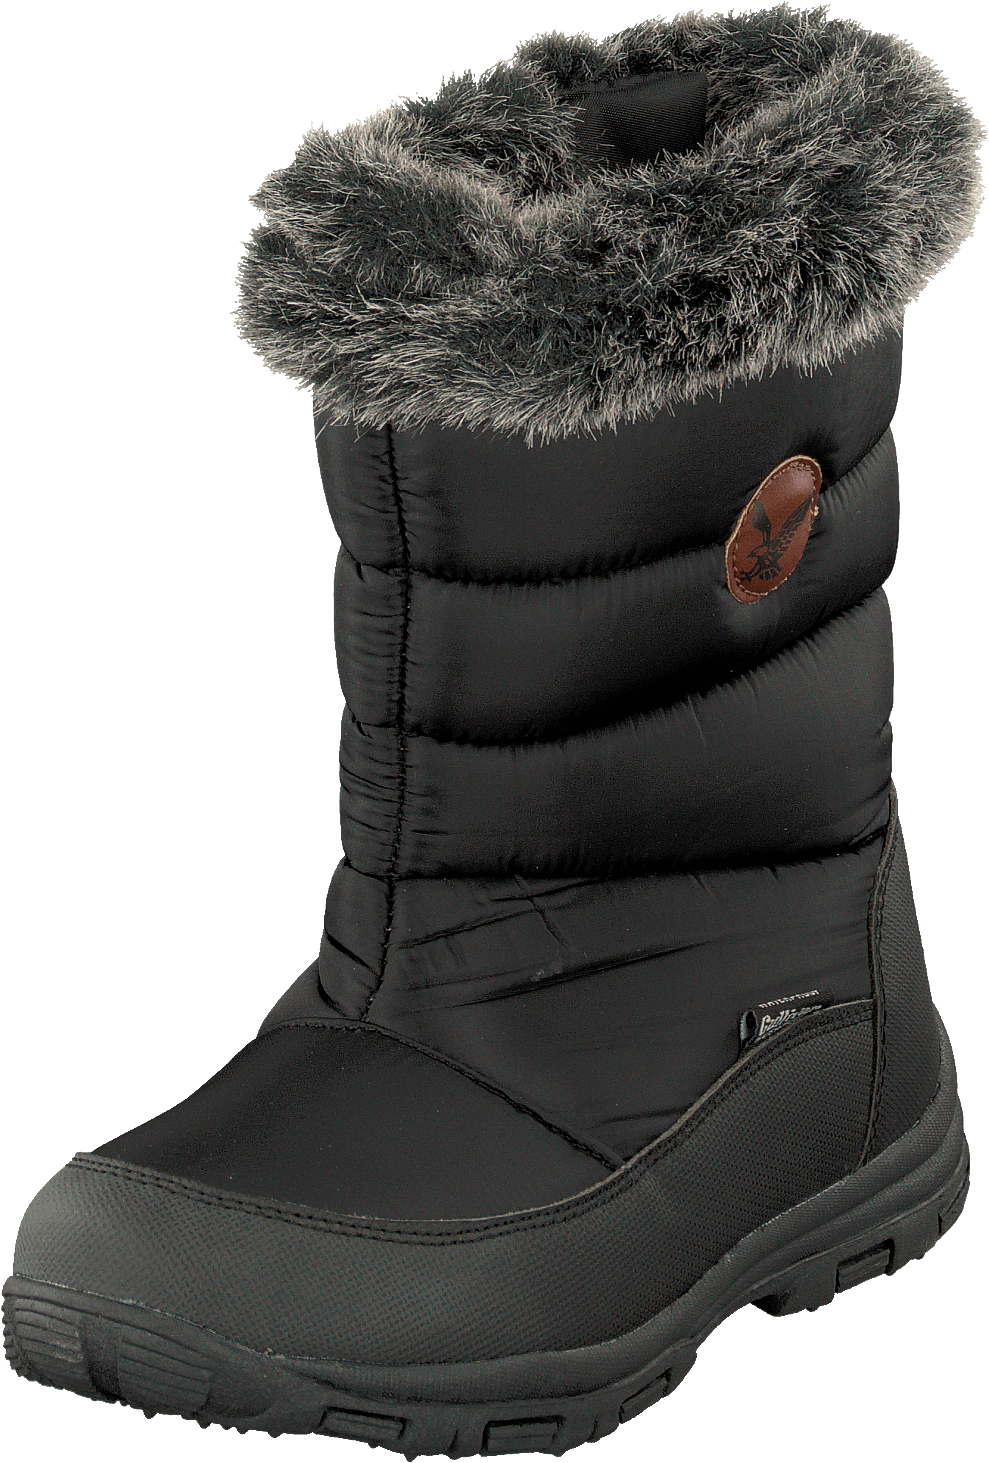 430-0969 Boots Waterproof Black